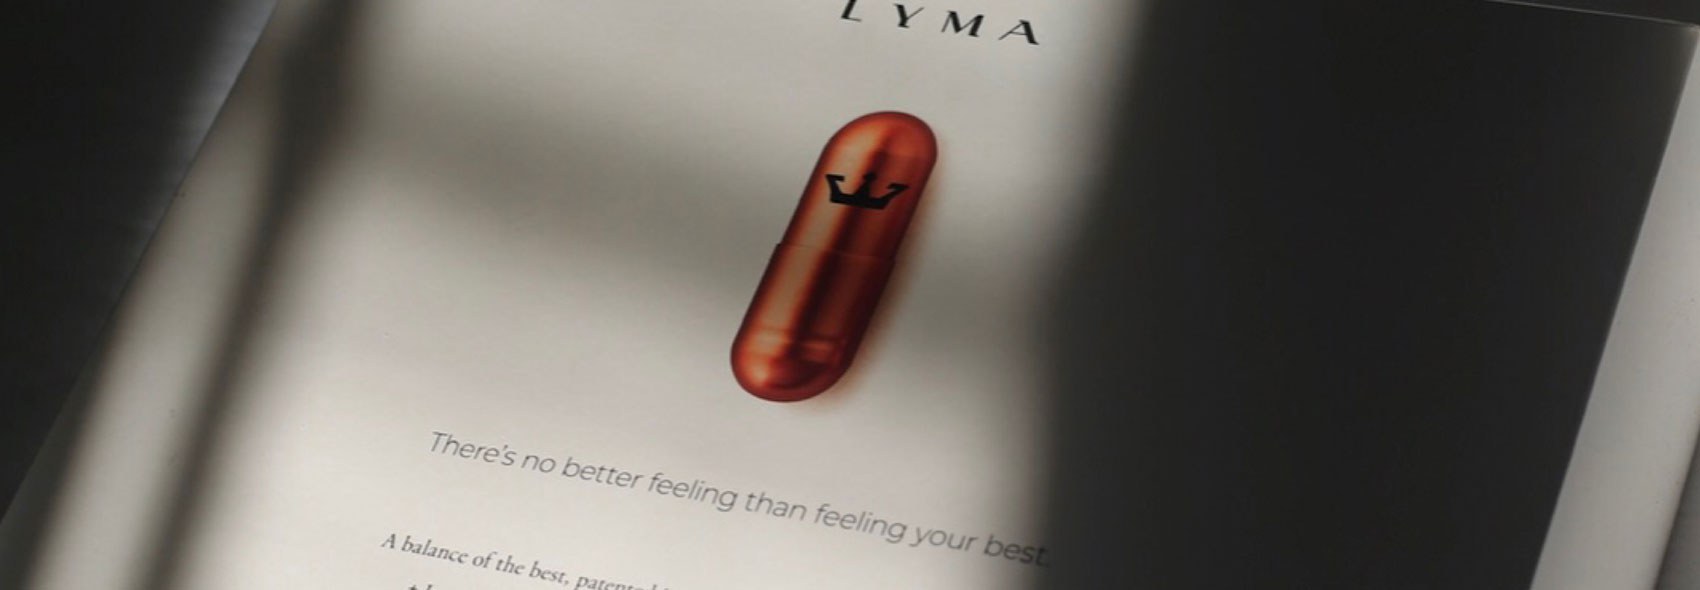 LYMA pill on a book